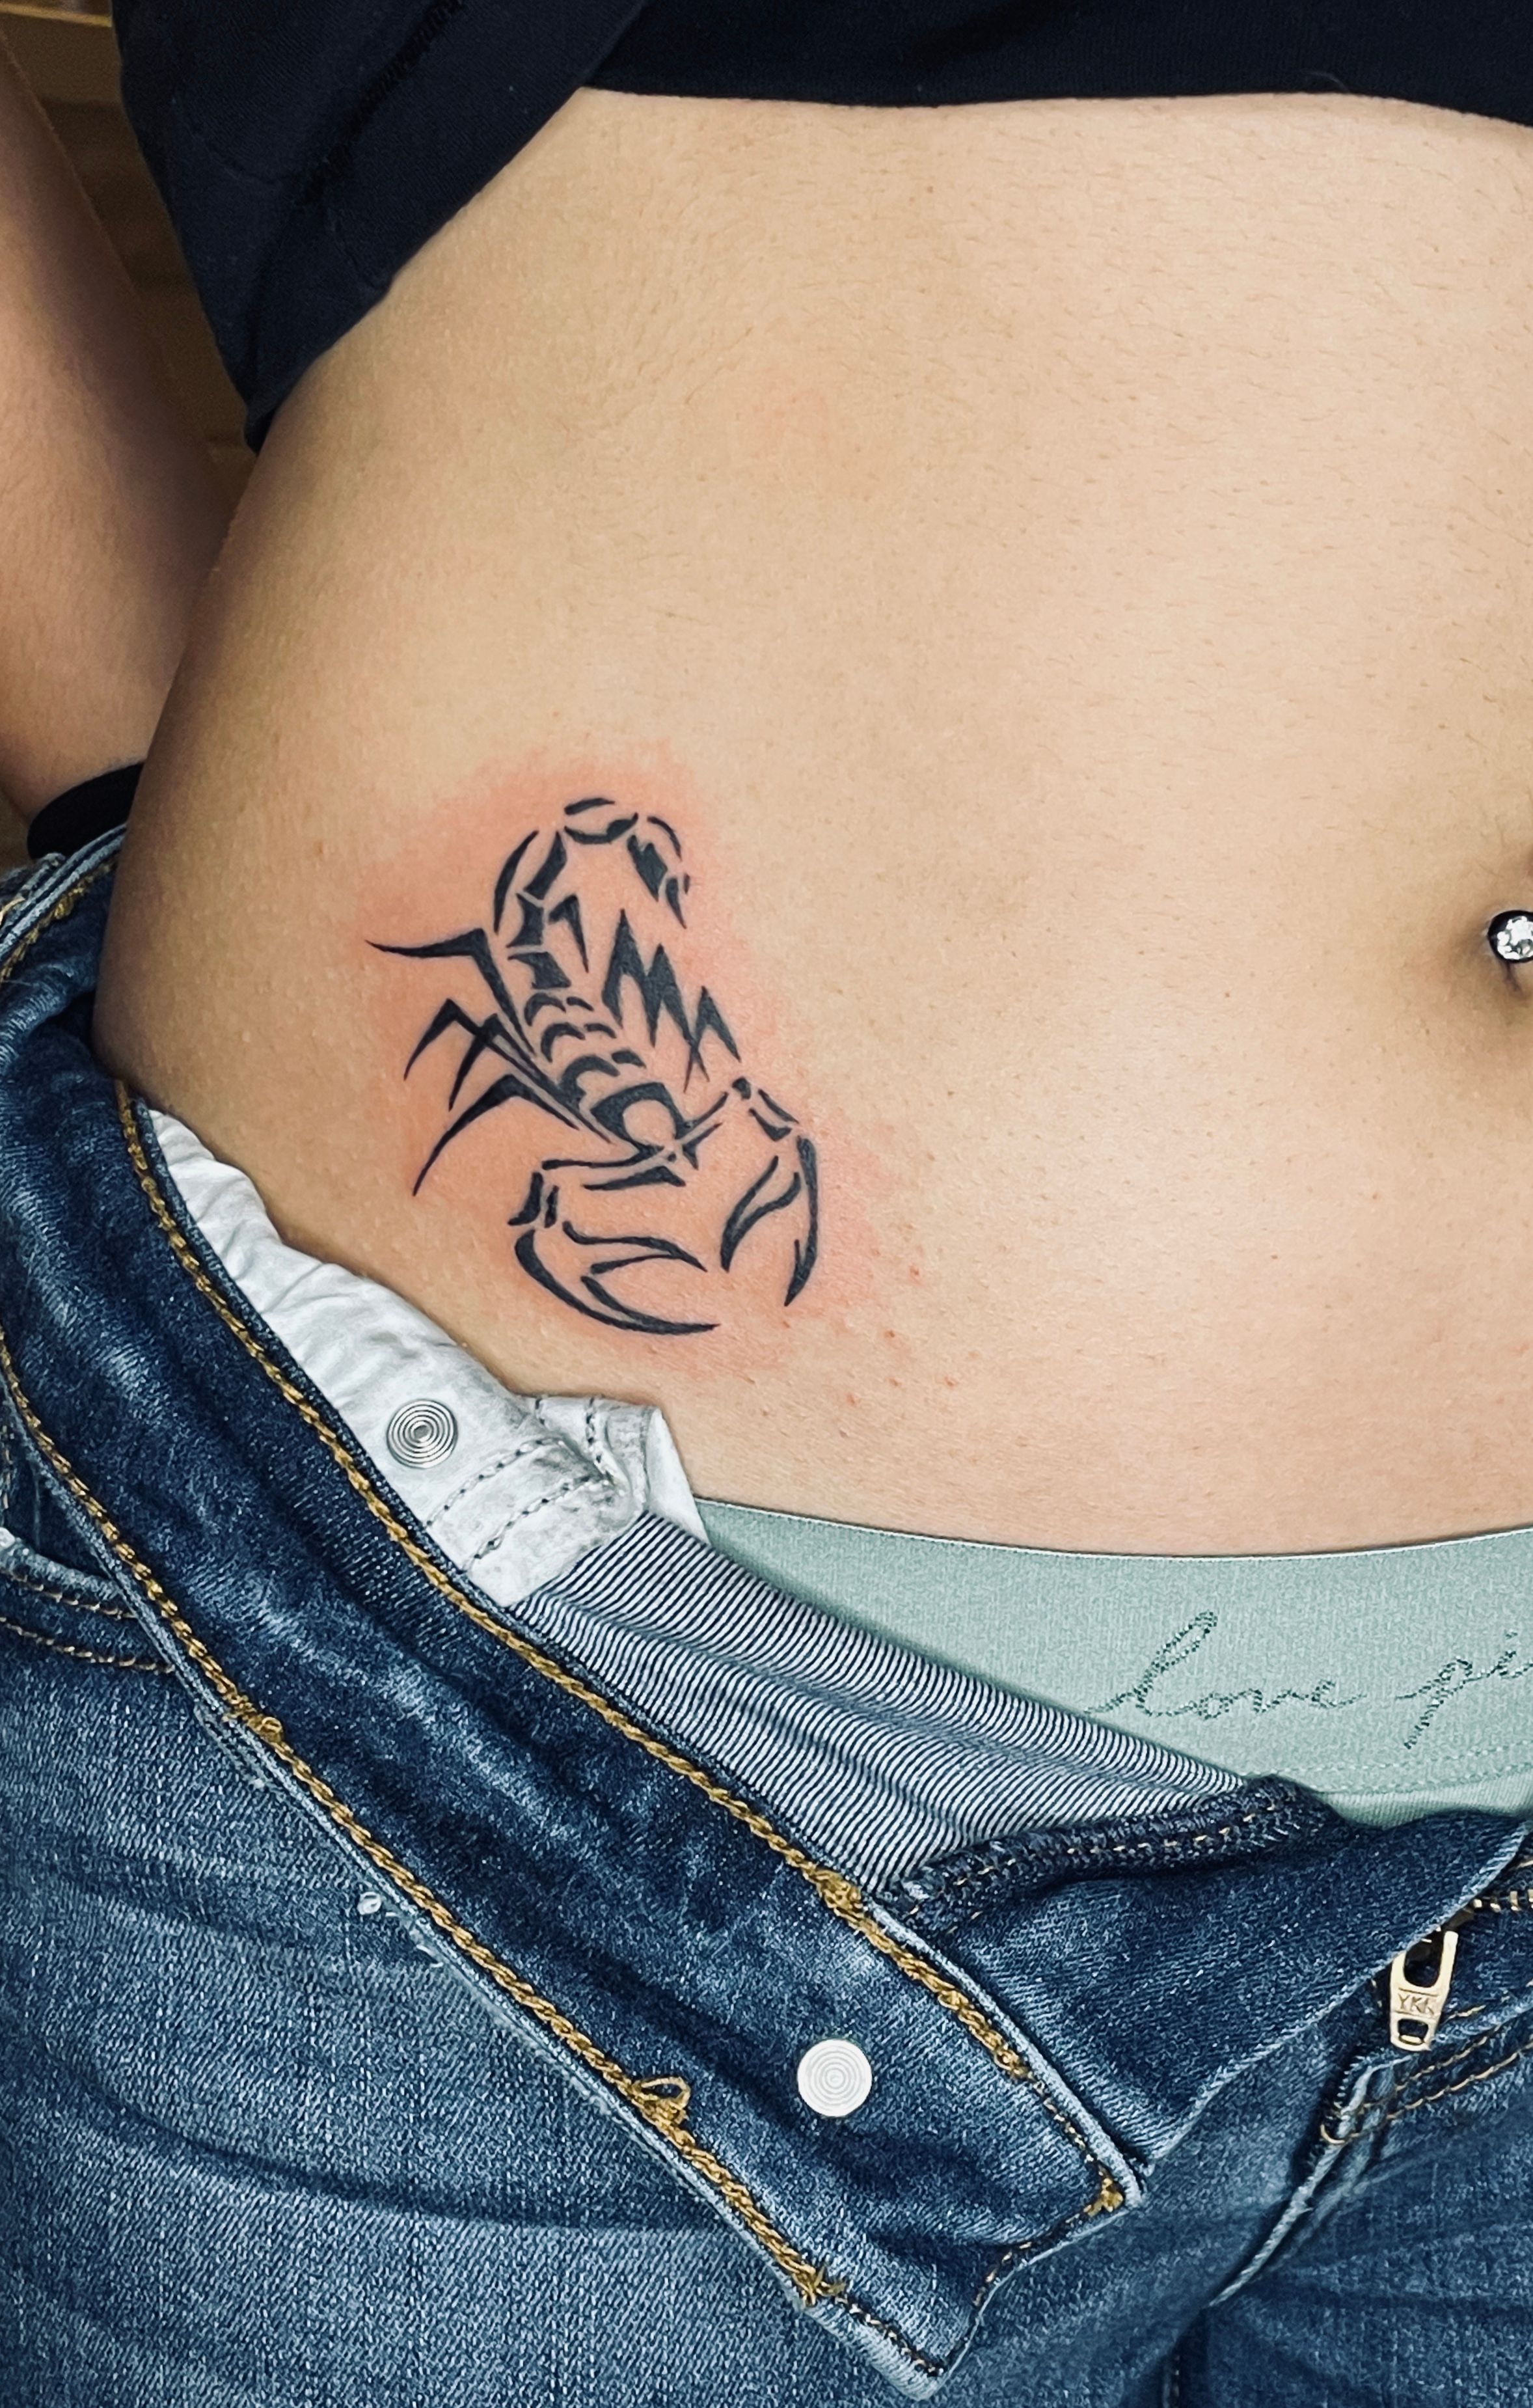 25 Best Hip Tattoo Ideas